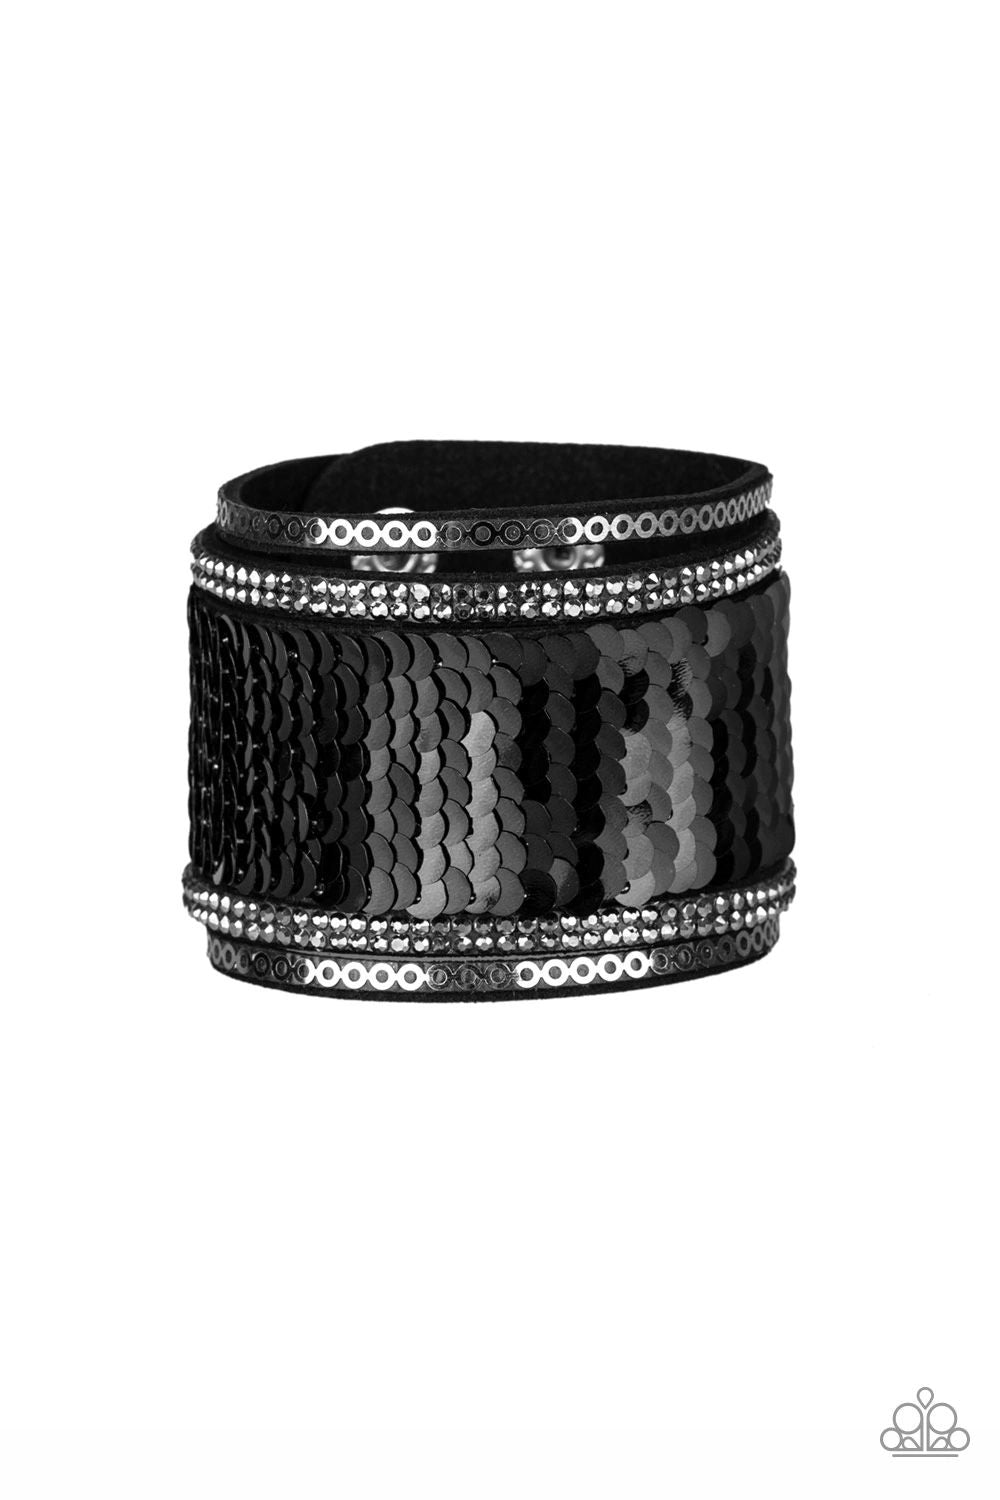 Heads Or MERMAID Tails - Black / Silver wrap bracelet